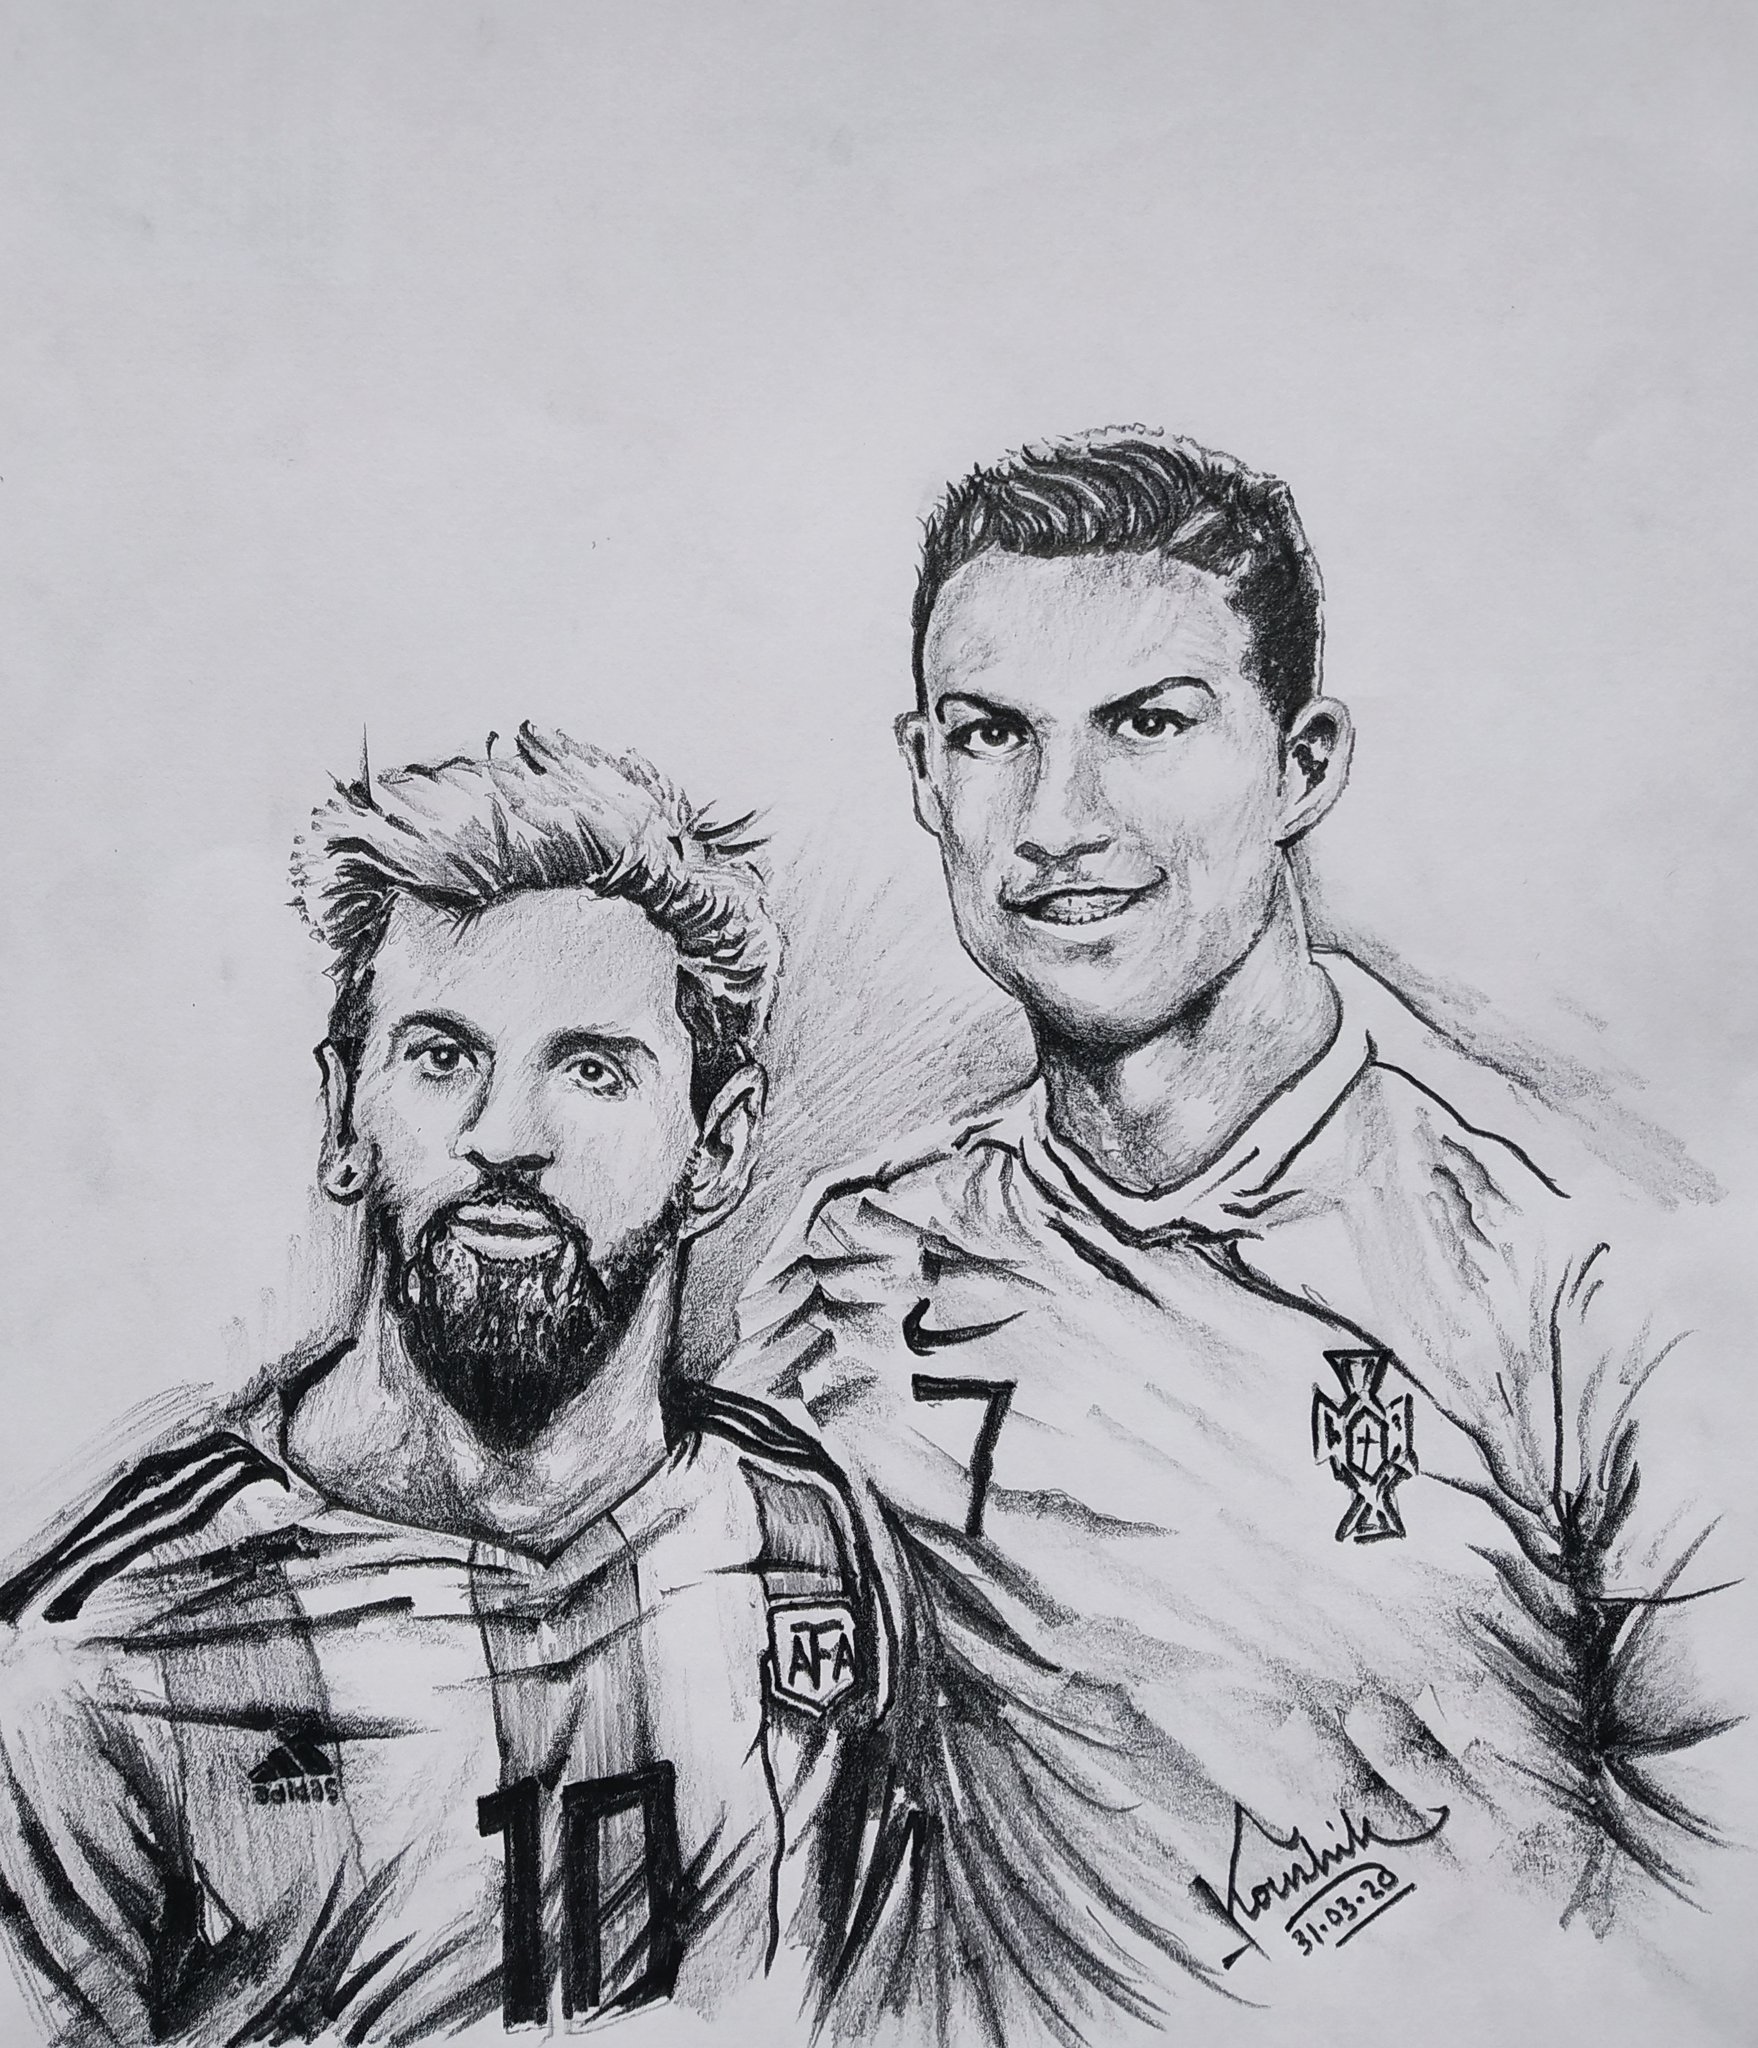  Messi vs Ronaldo  Messi  The best footballer ever  Facebook